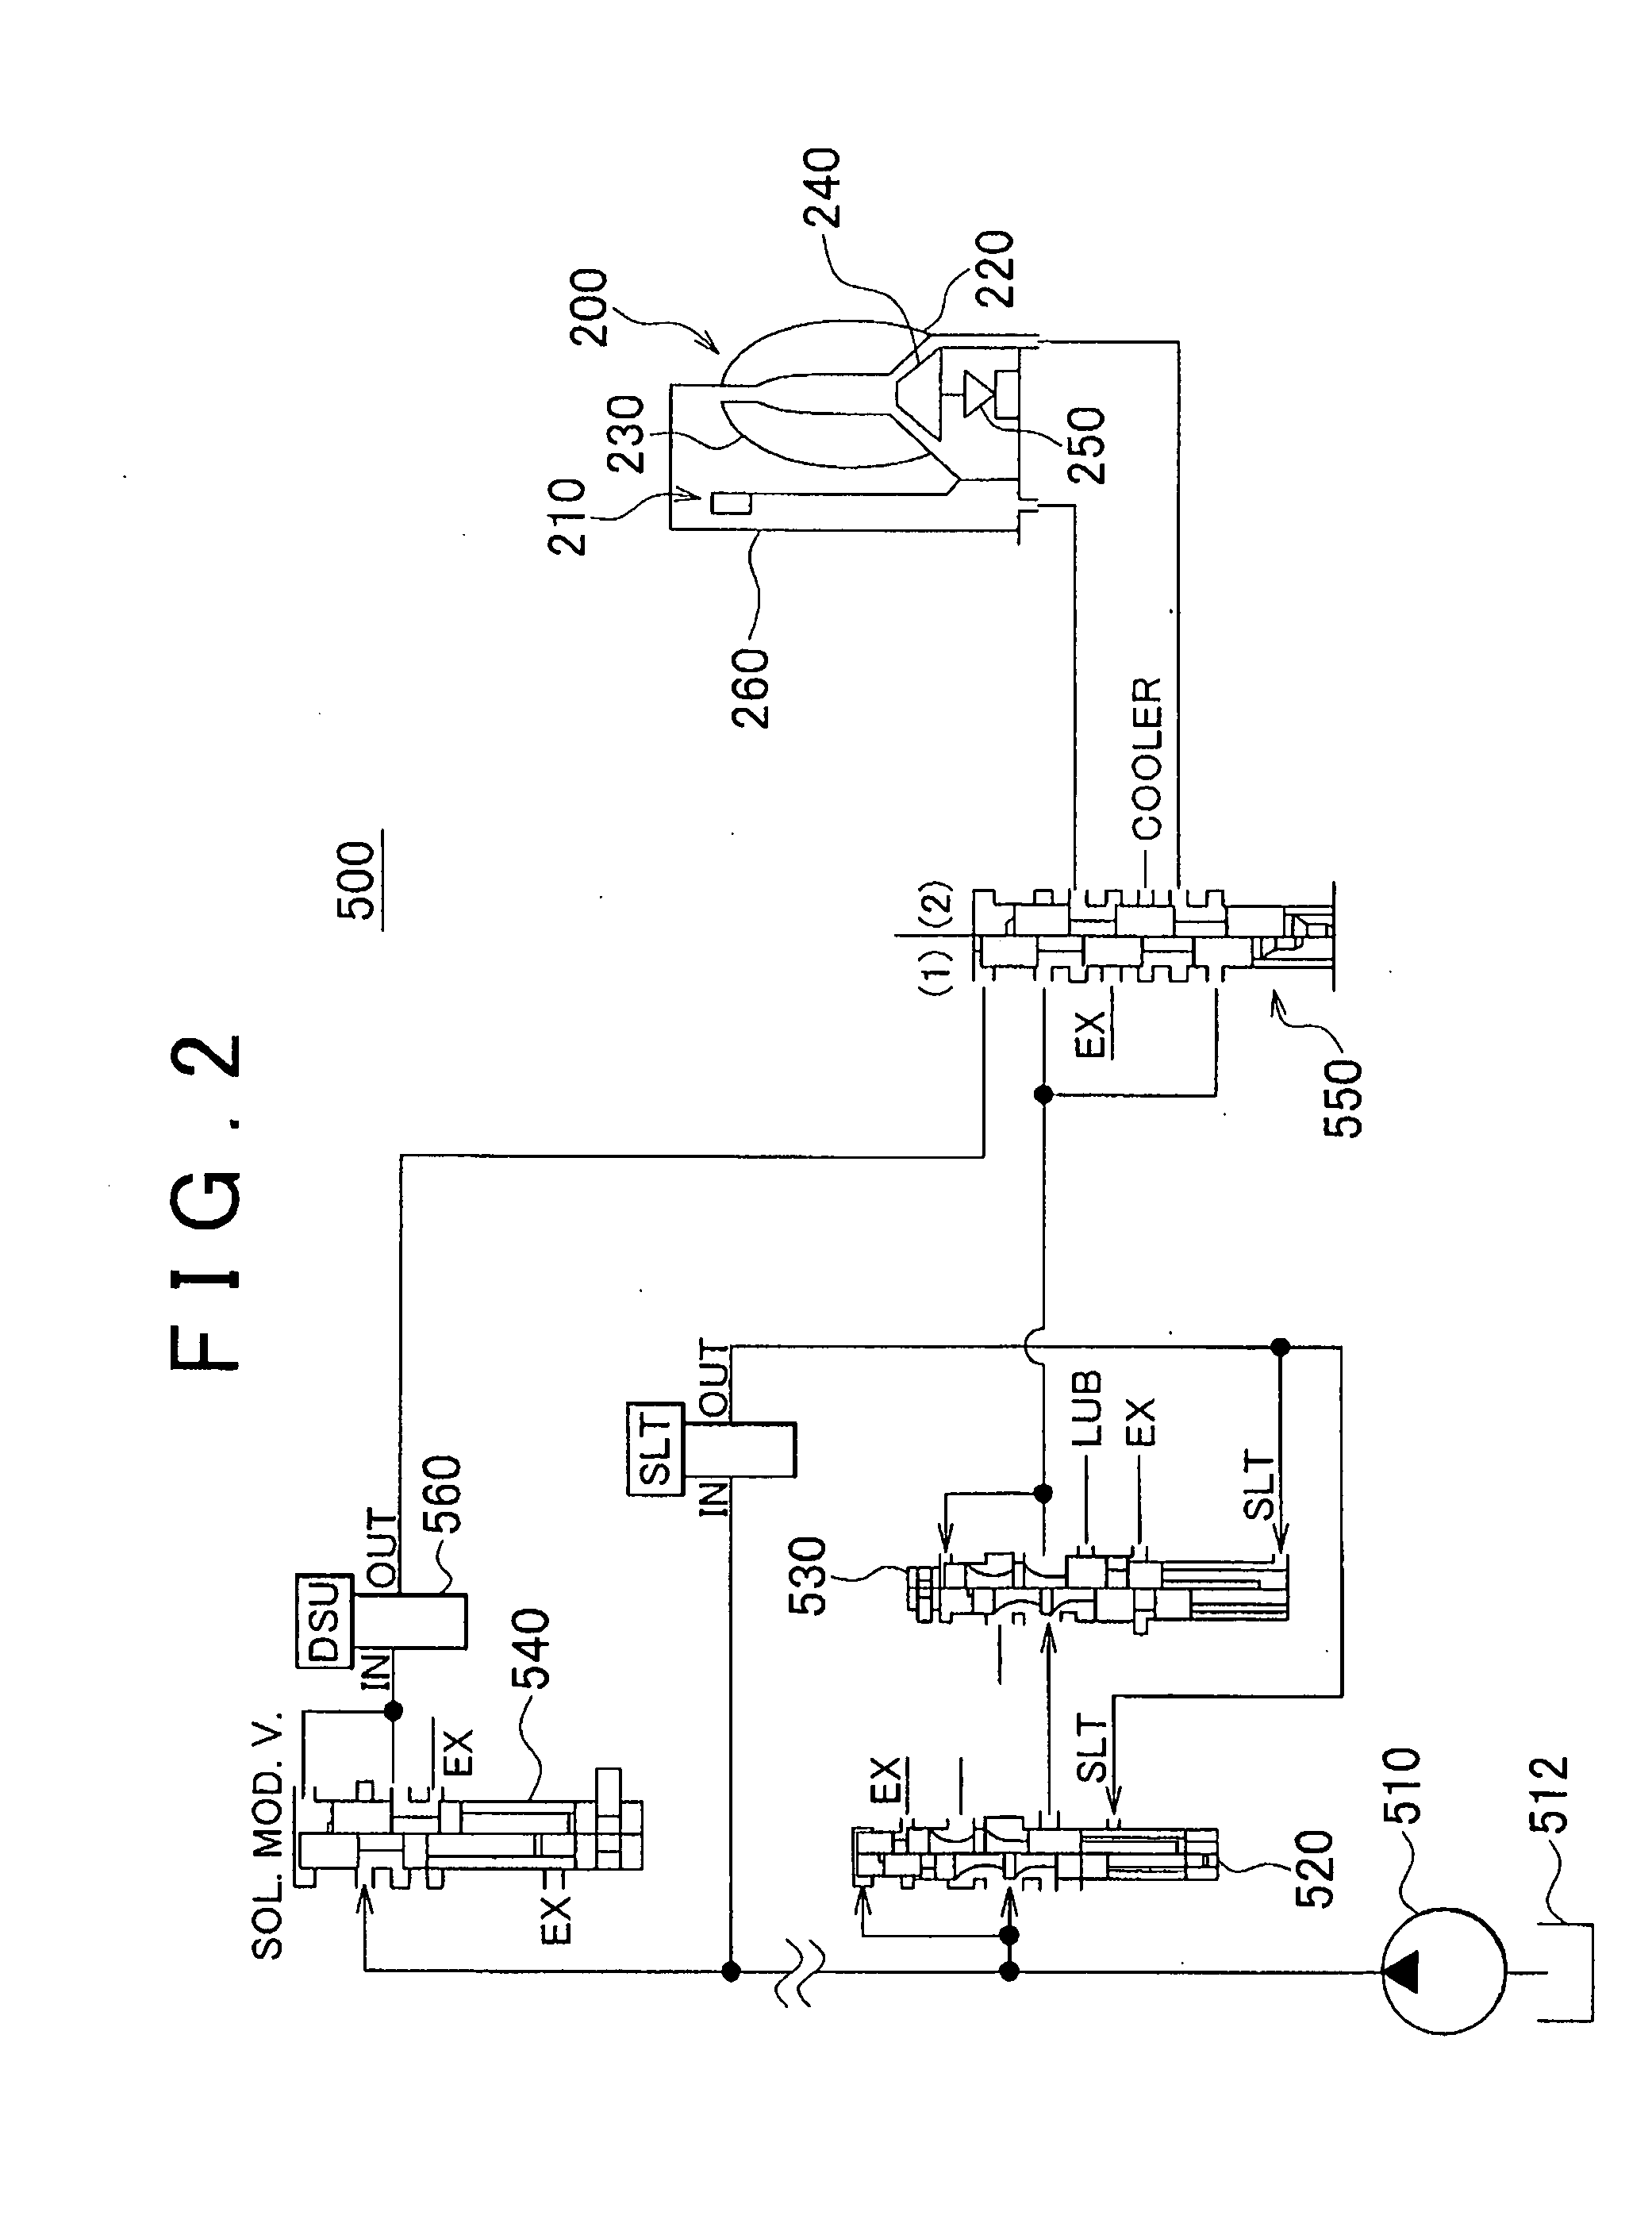 Powertrain control apparatus and method